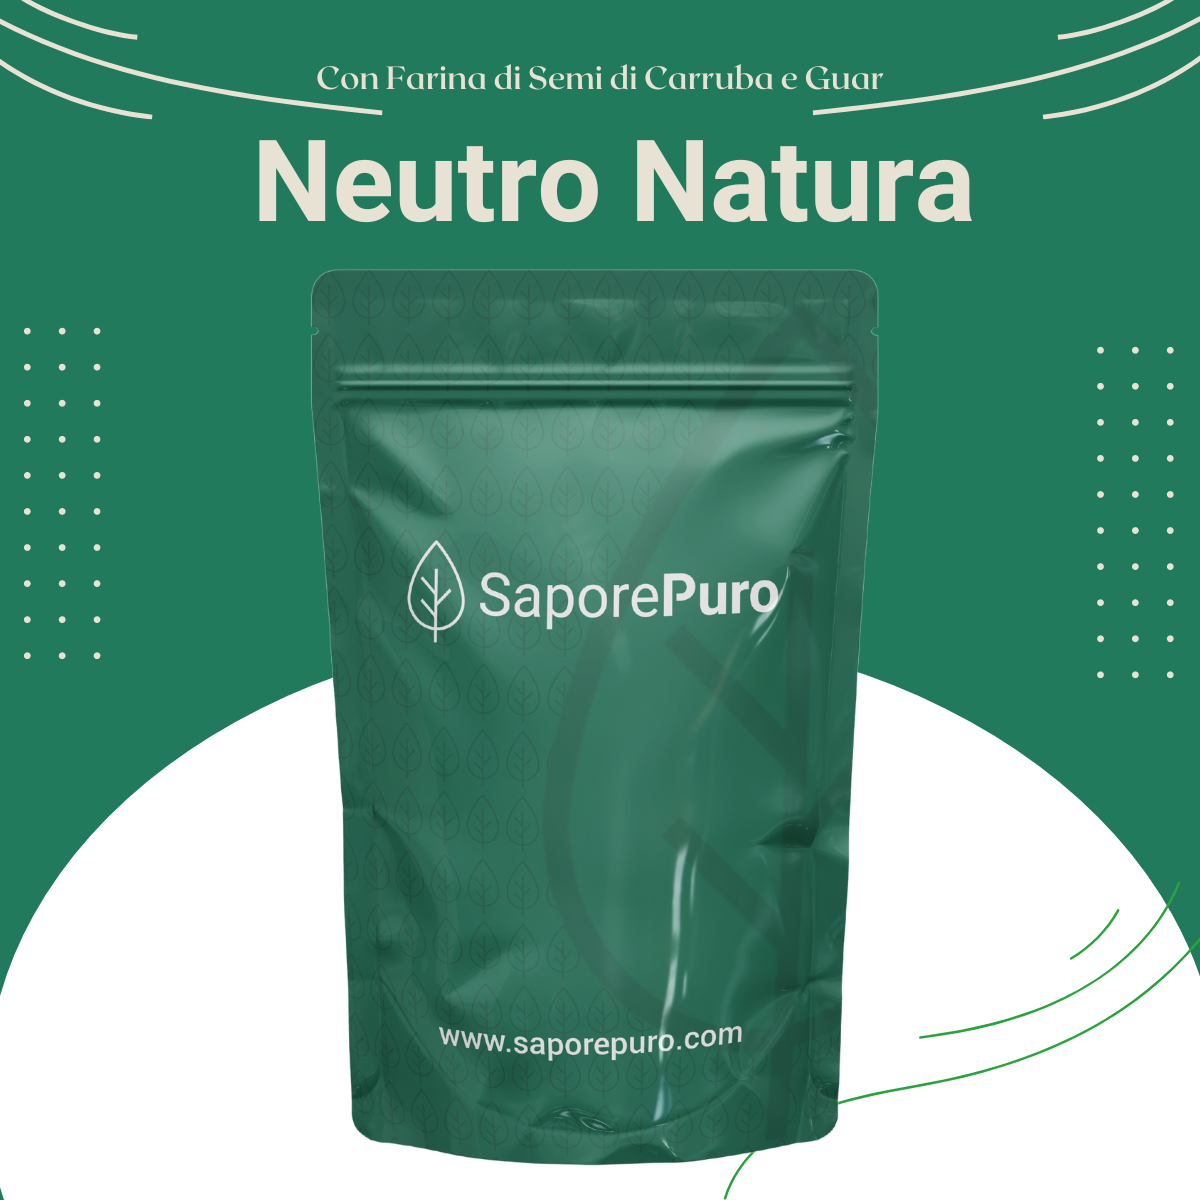 Neutro Natura 5 per gelato - Stabilizzante Carruba / Guar senza emulsionanti per Gelati MADE IN ITALY - Ideale per Gelati base Latte